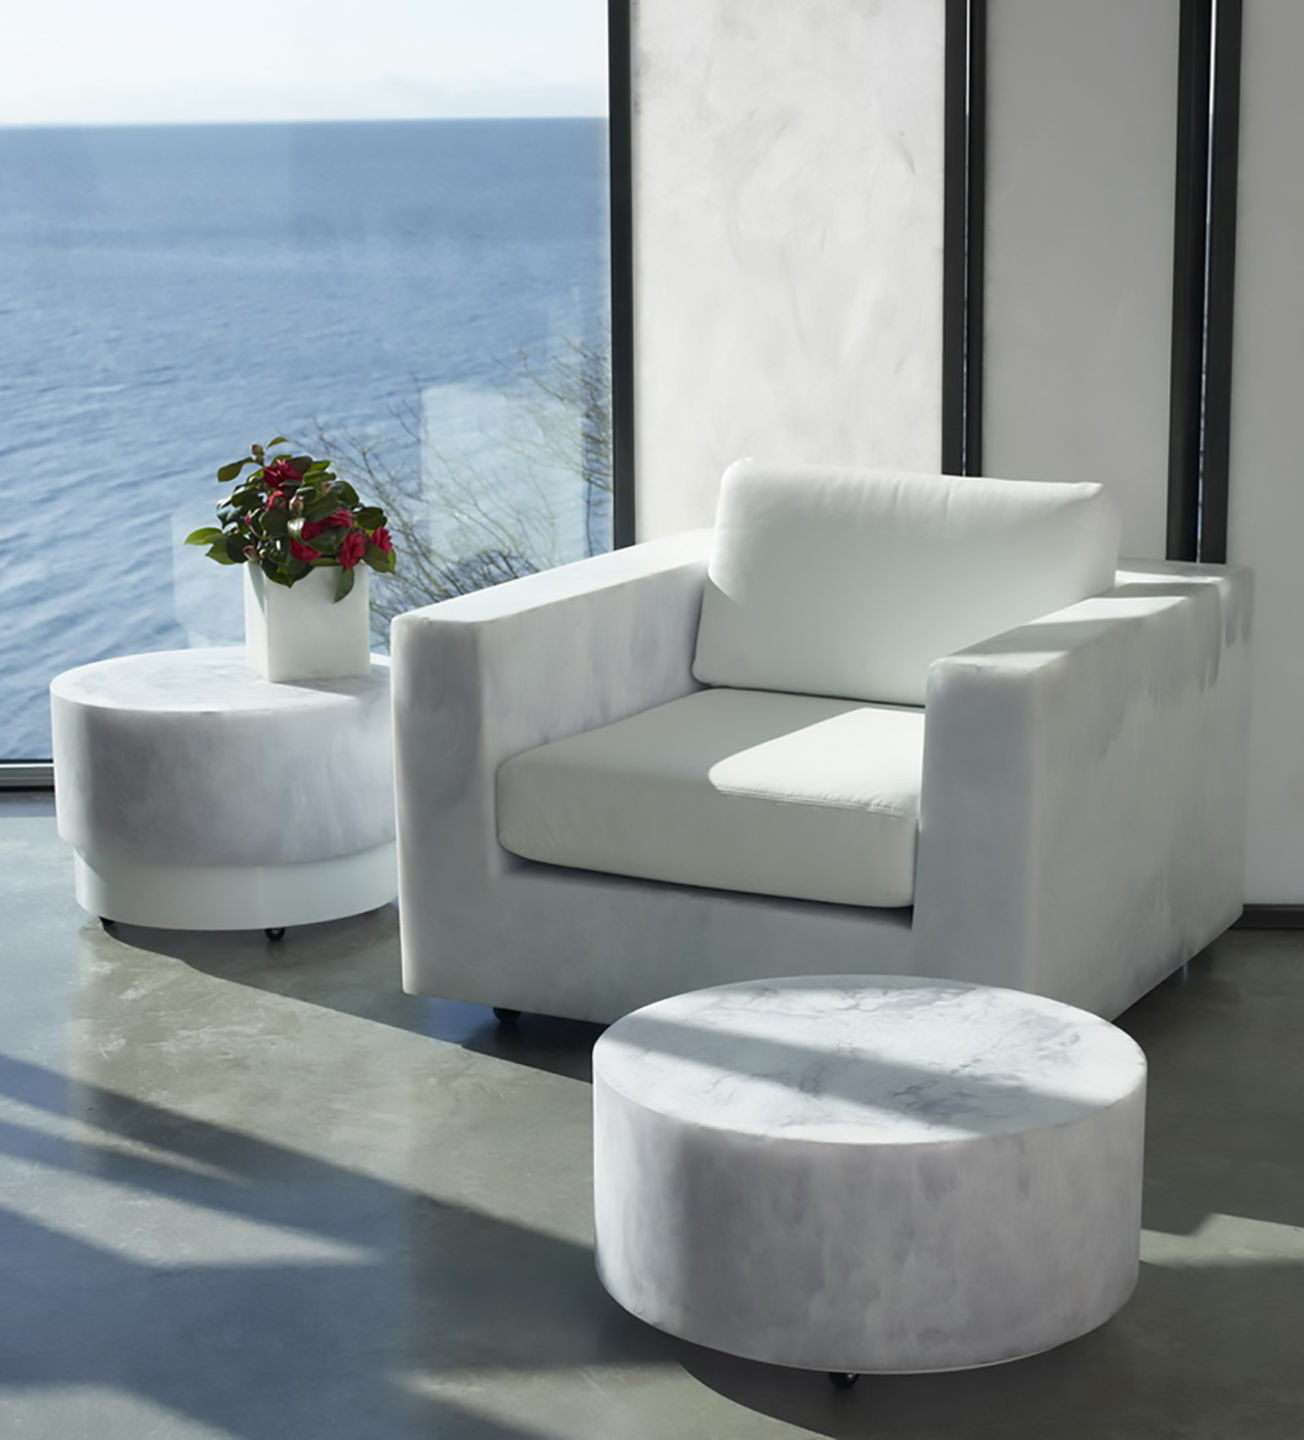 white resin chair